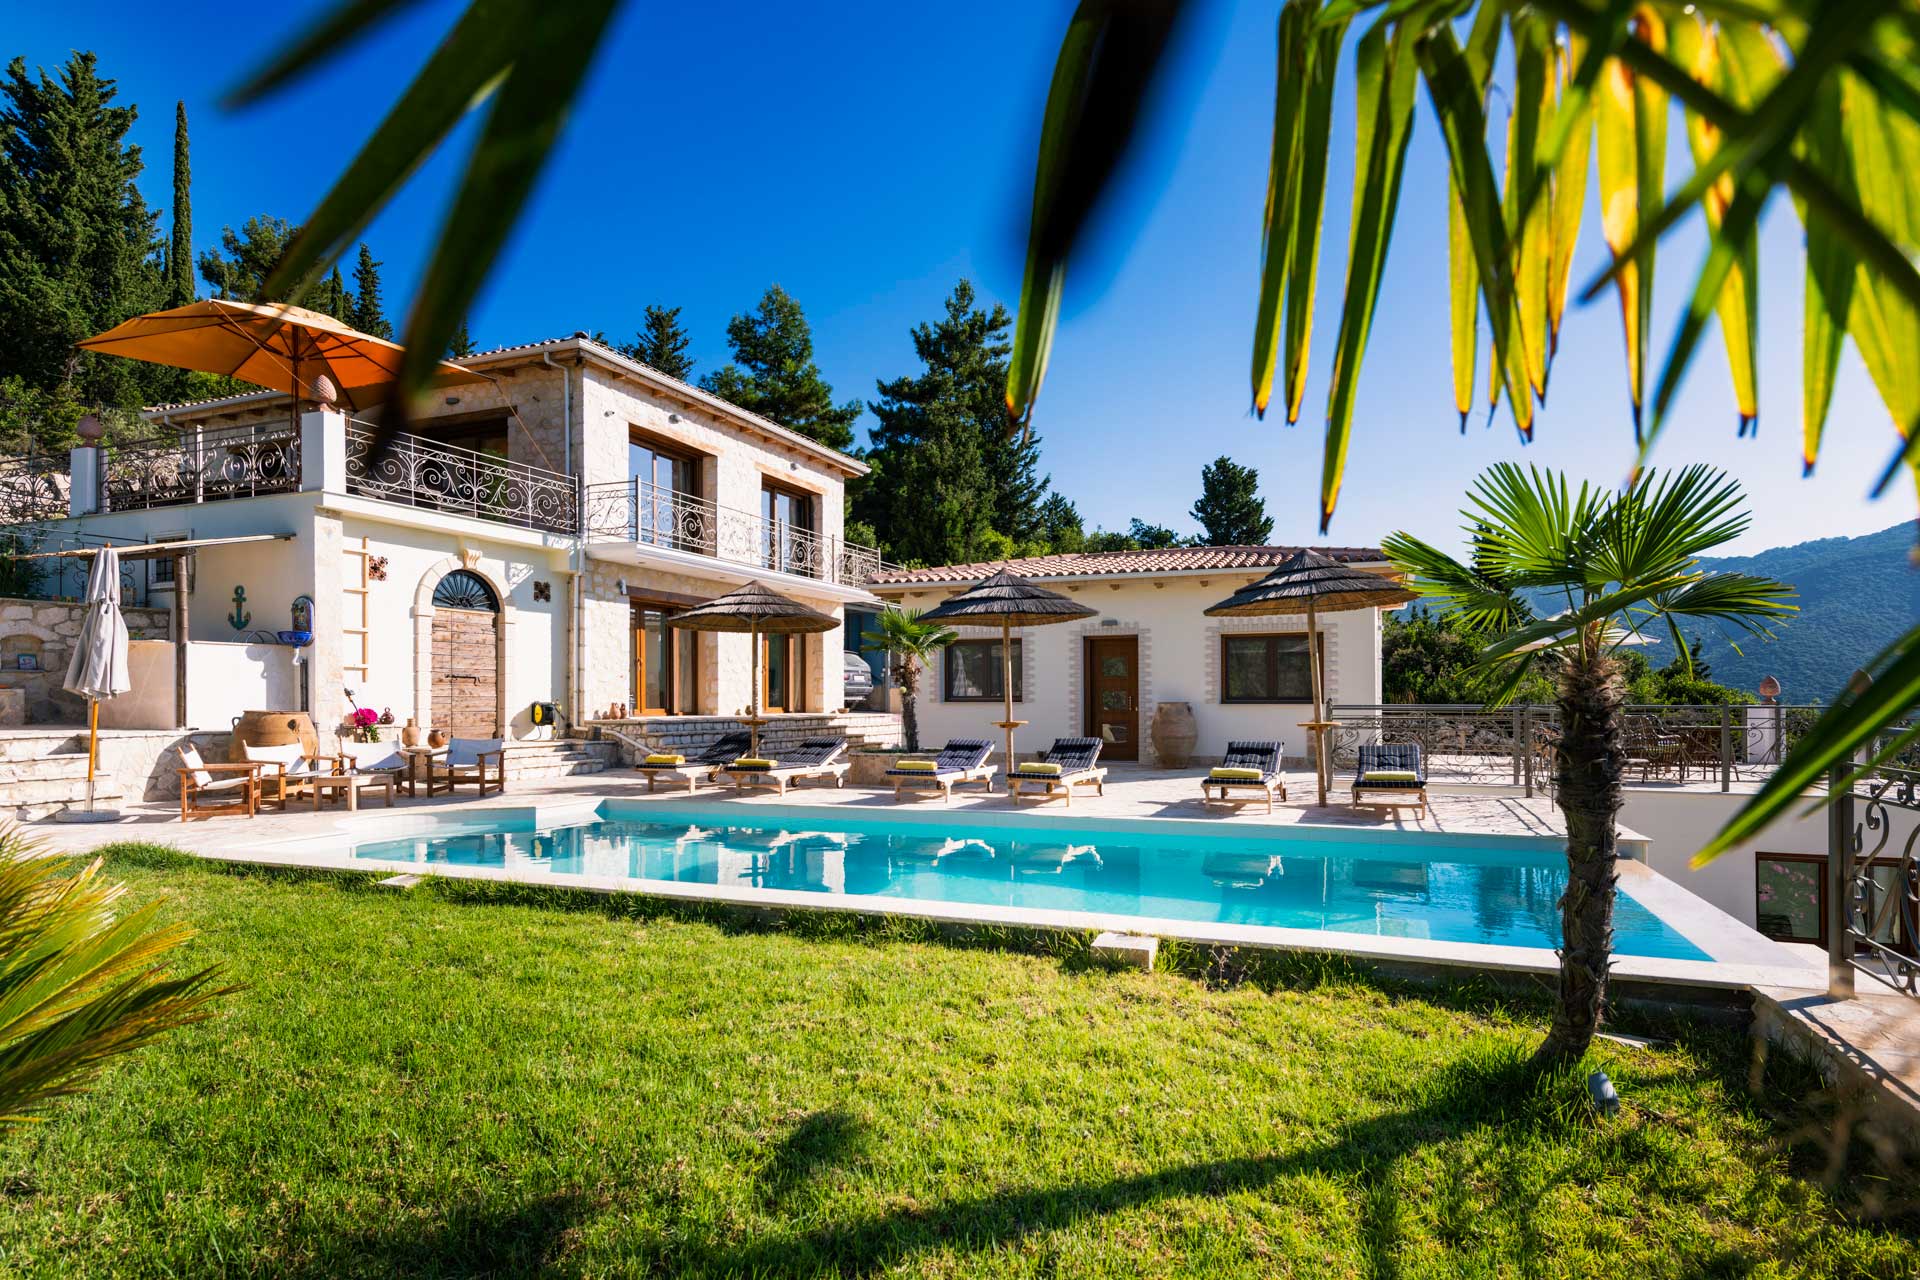 THE VIEW LUXURY VILLAS - summer residence, luxury property, greece